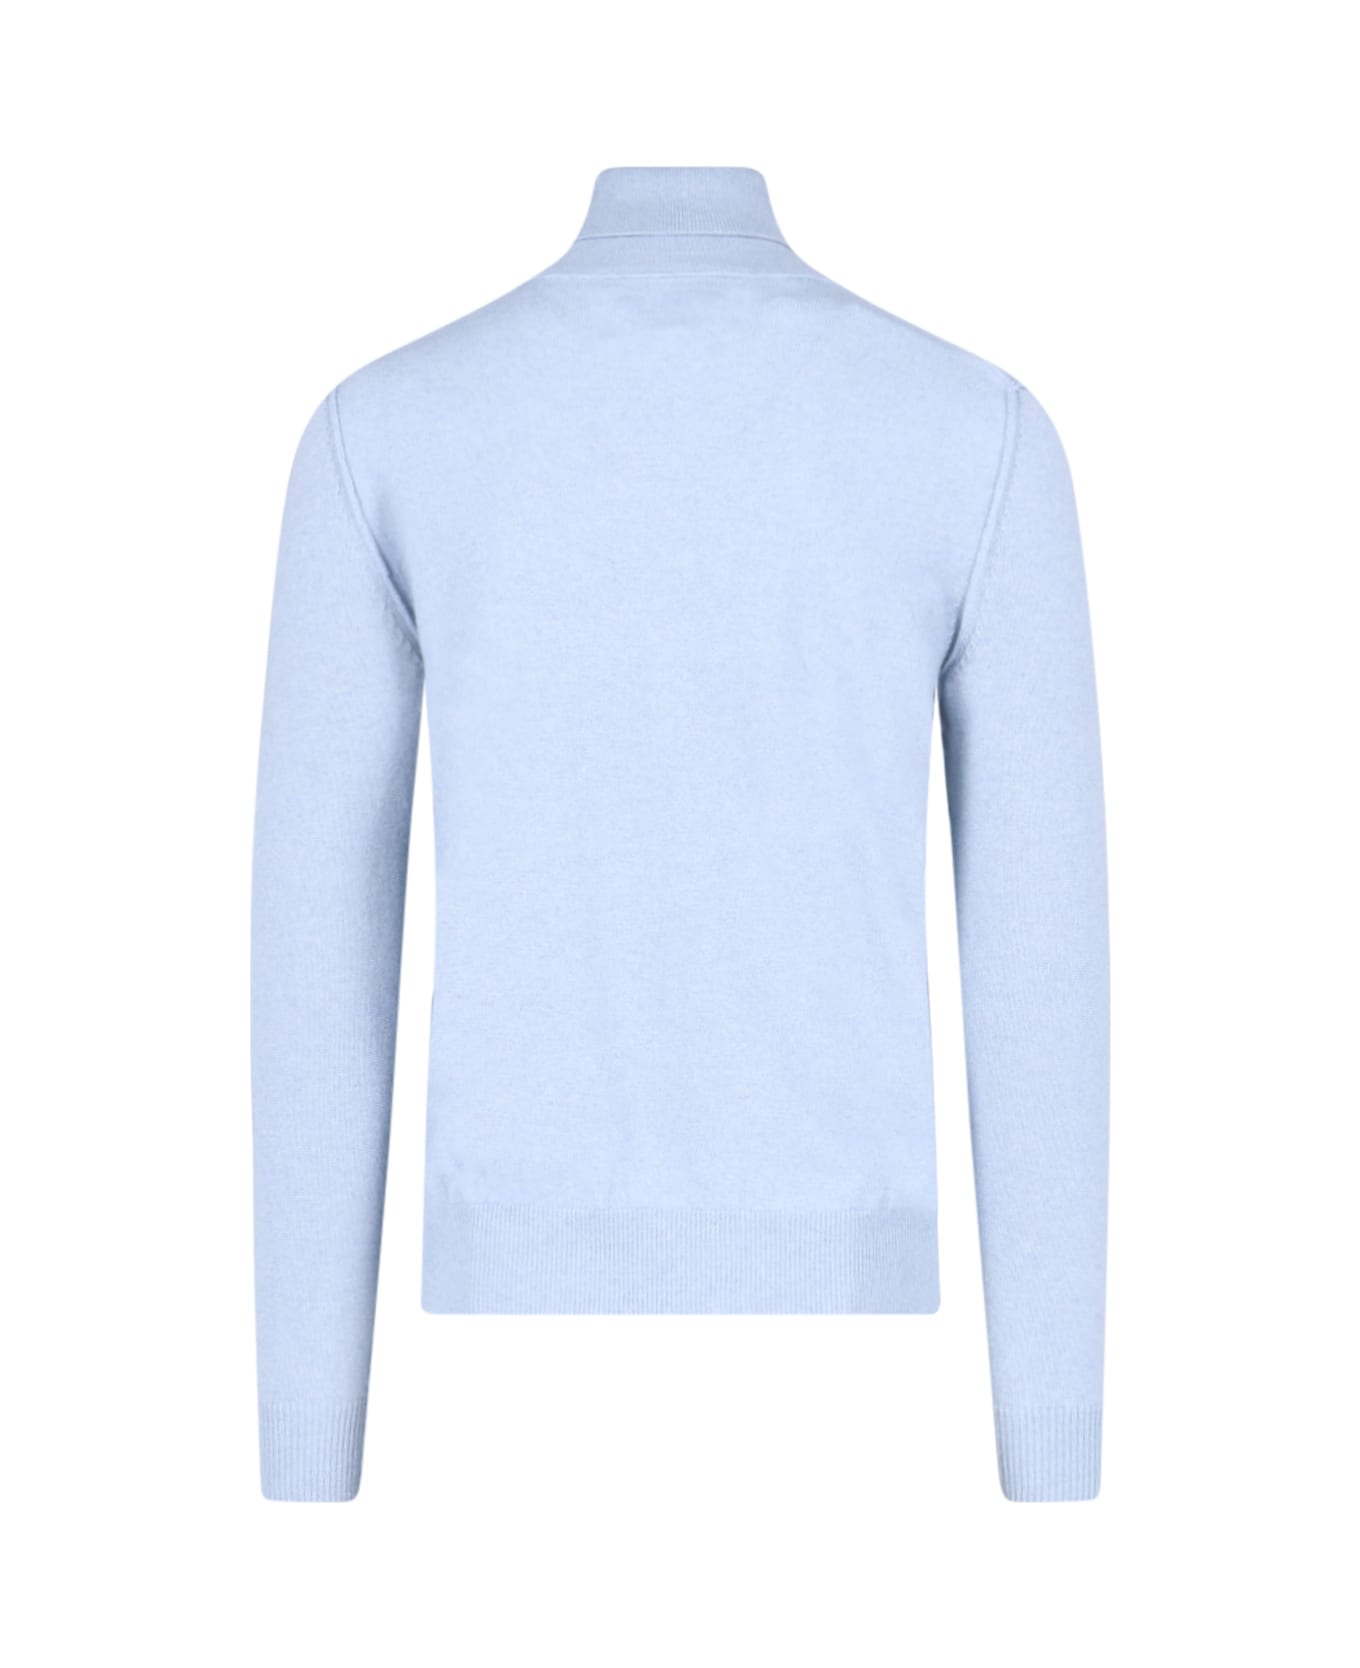 Maison Margiela Cashmere Sweater - Light blue ニットウェア